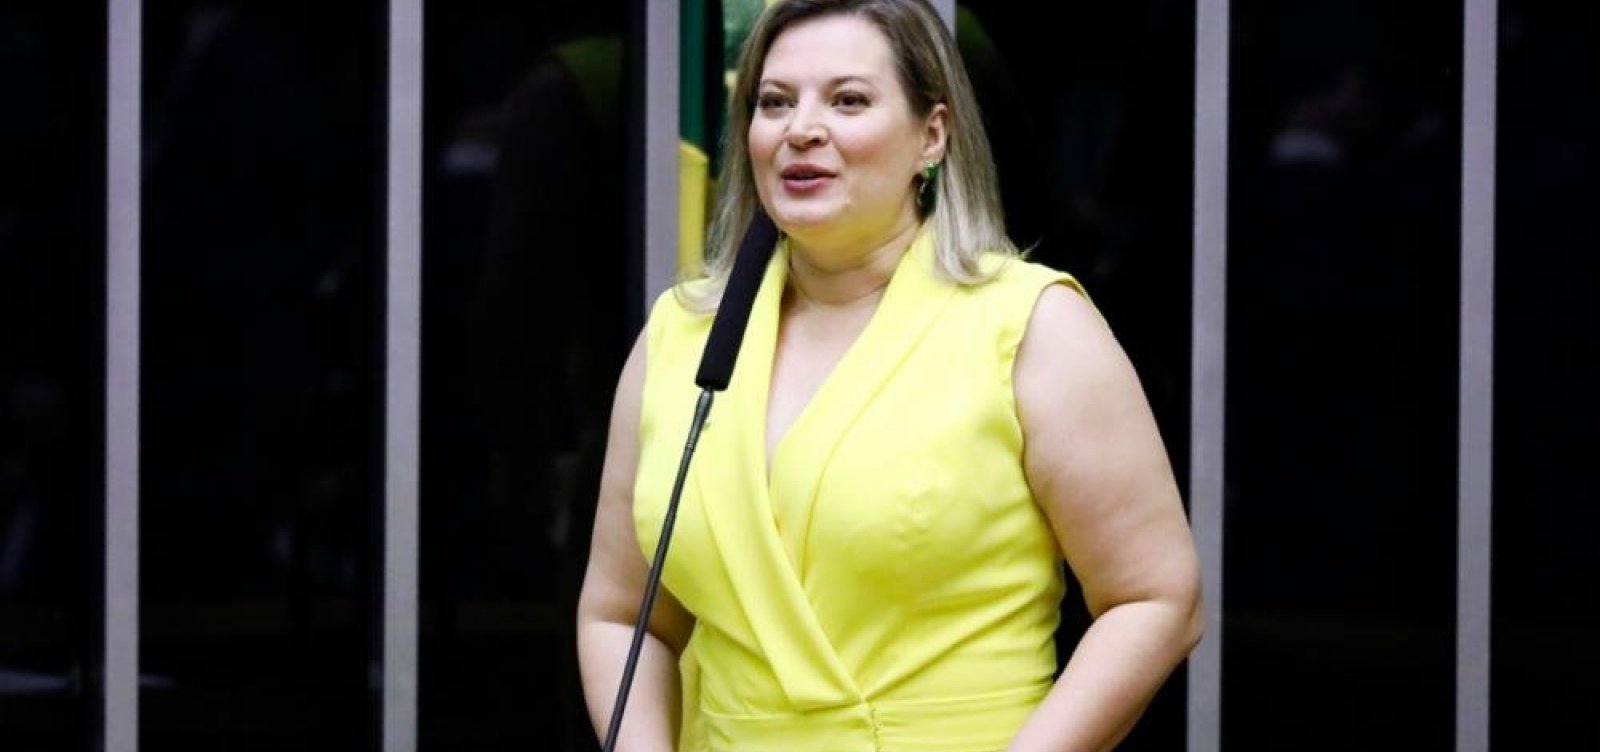 Joice Hasselmann é a nova líder da bancada do PSL na Câmara